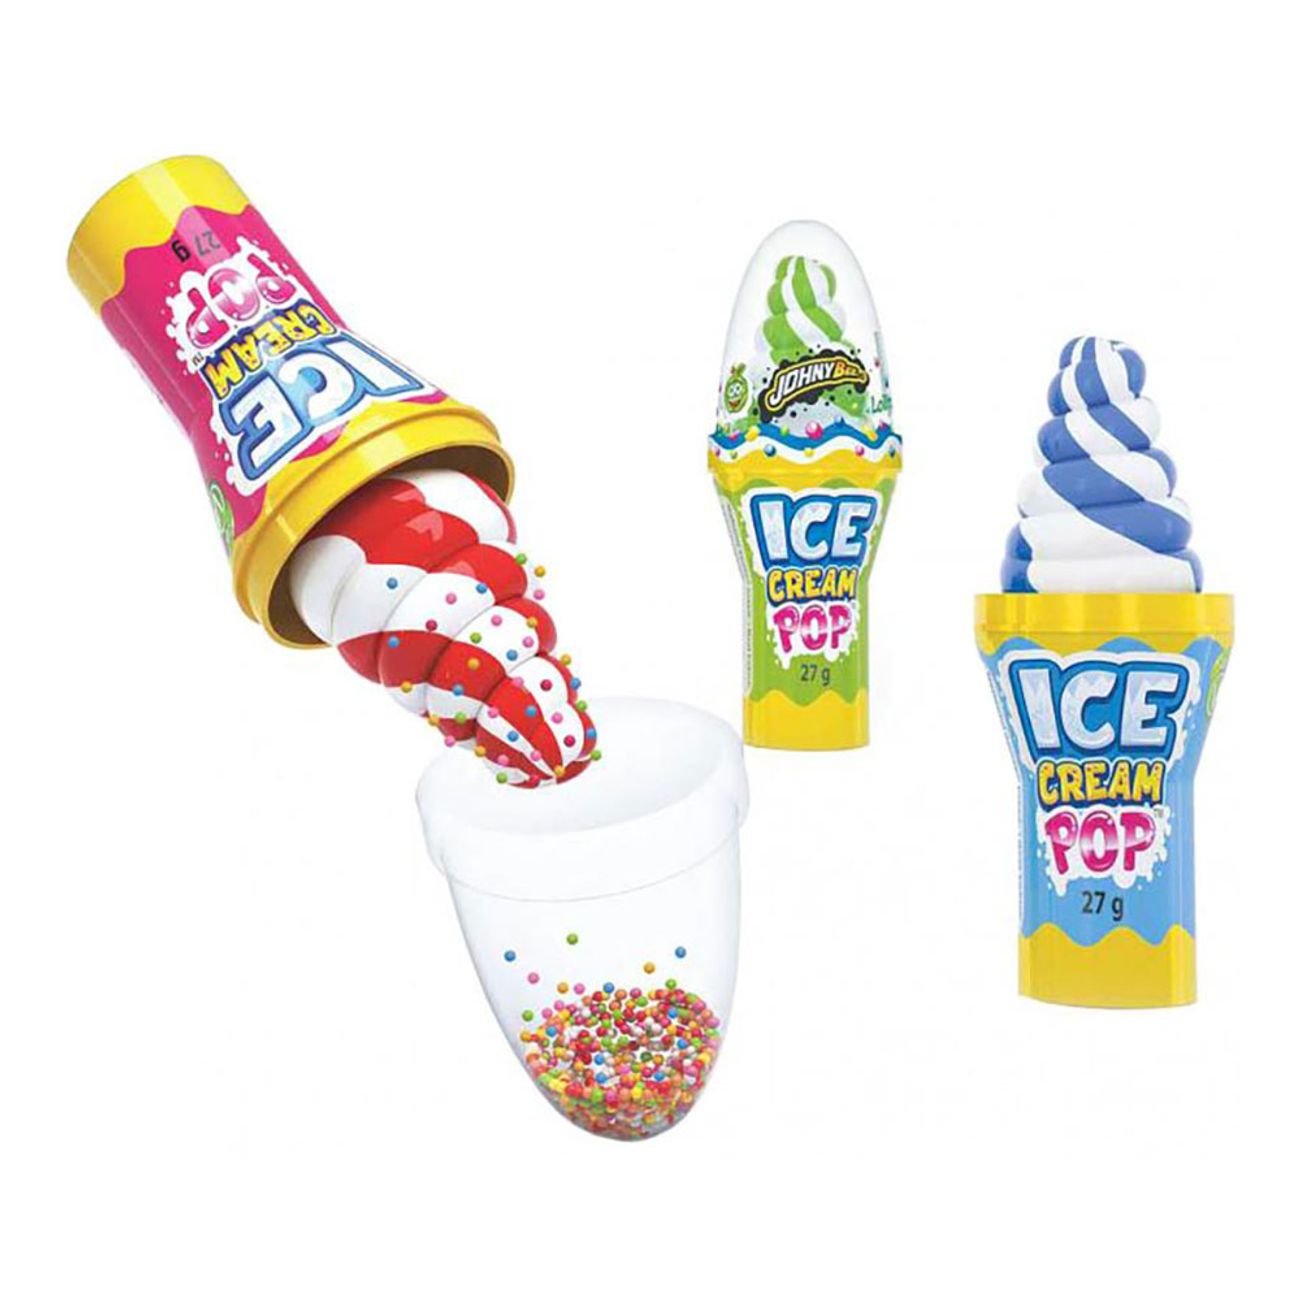 Jonny Bee ice cream pop